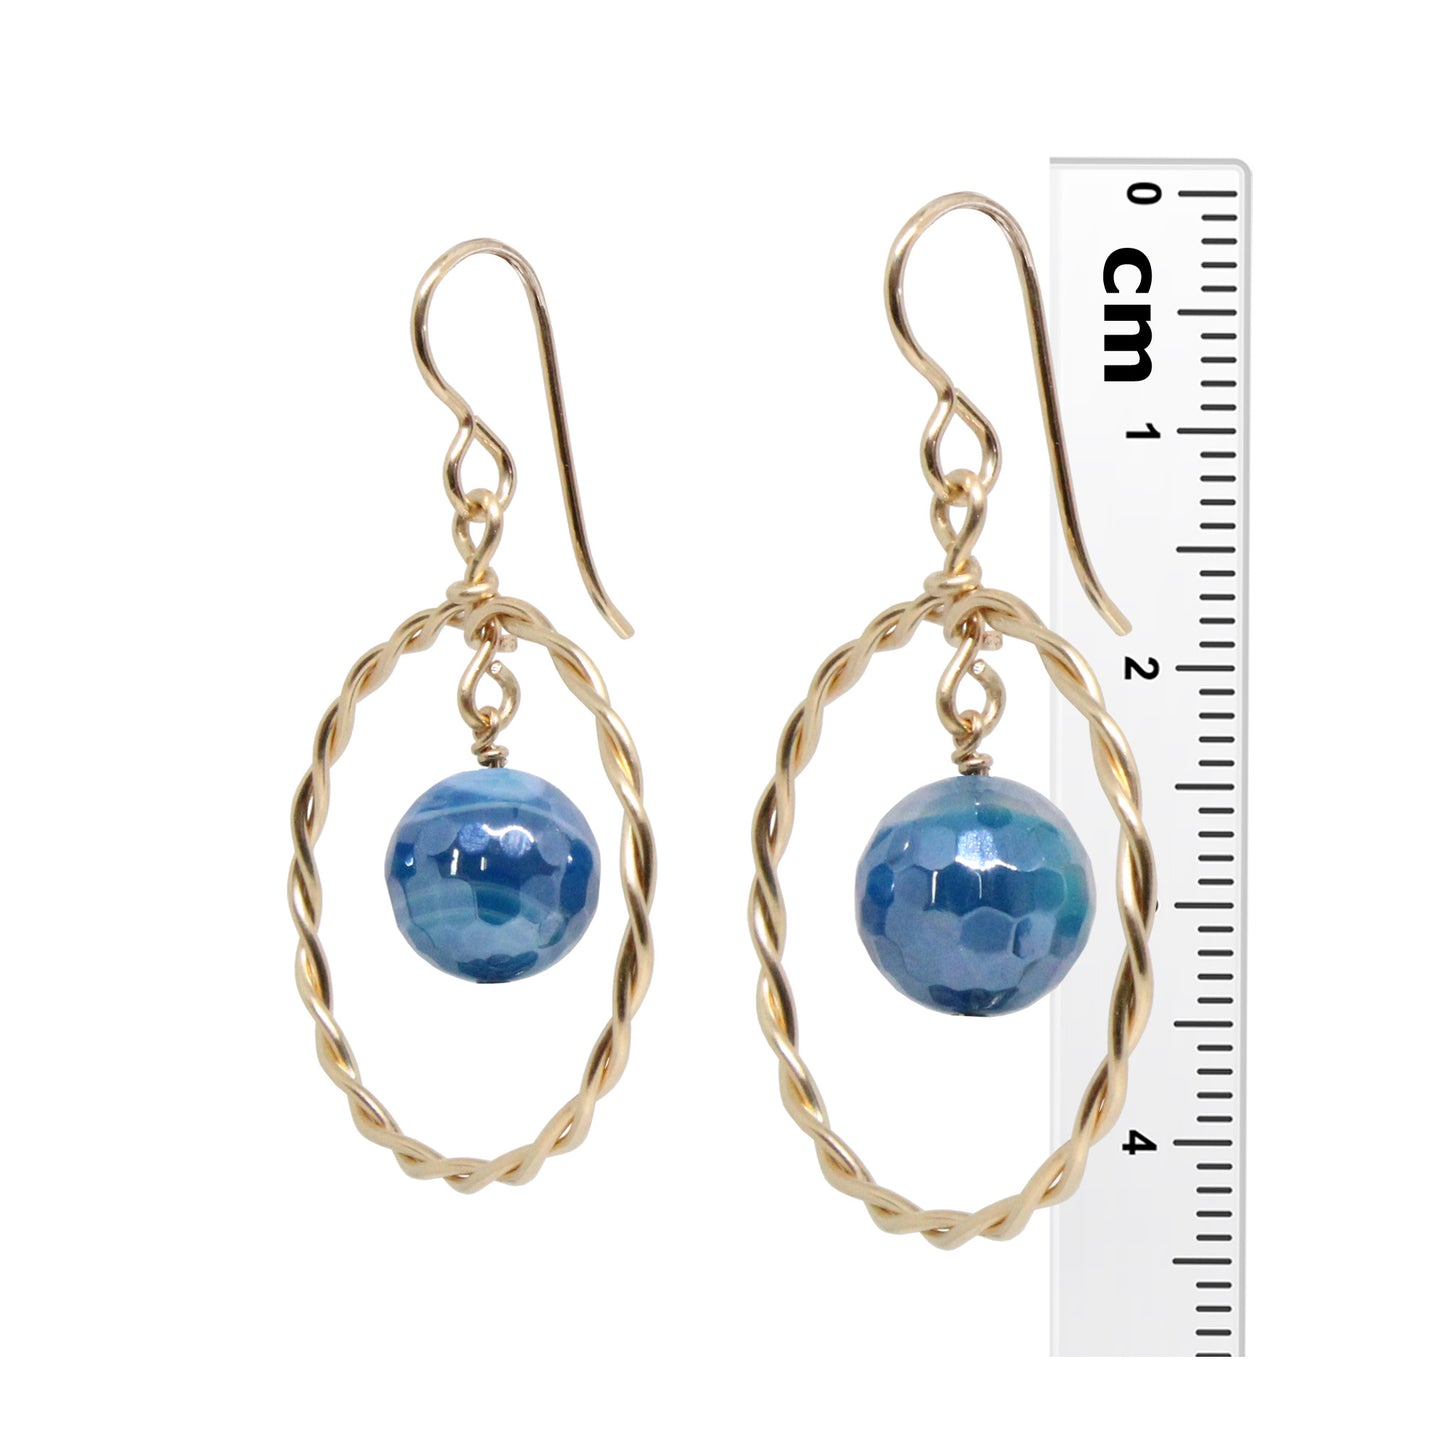 Twisted Wire Hoop Earrings / 45mm length / gold filled hook hook earwires / faceted agate beads / choose from sea blue, seafoam or purple